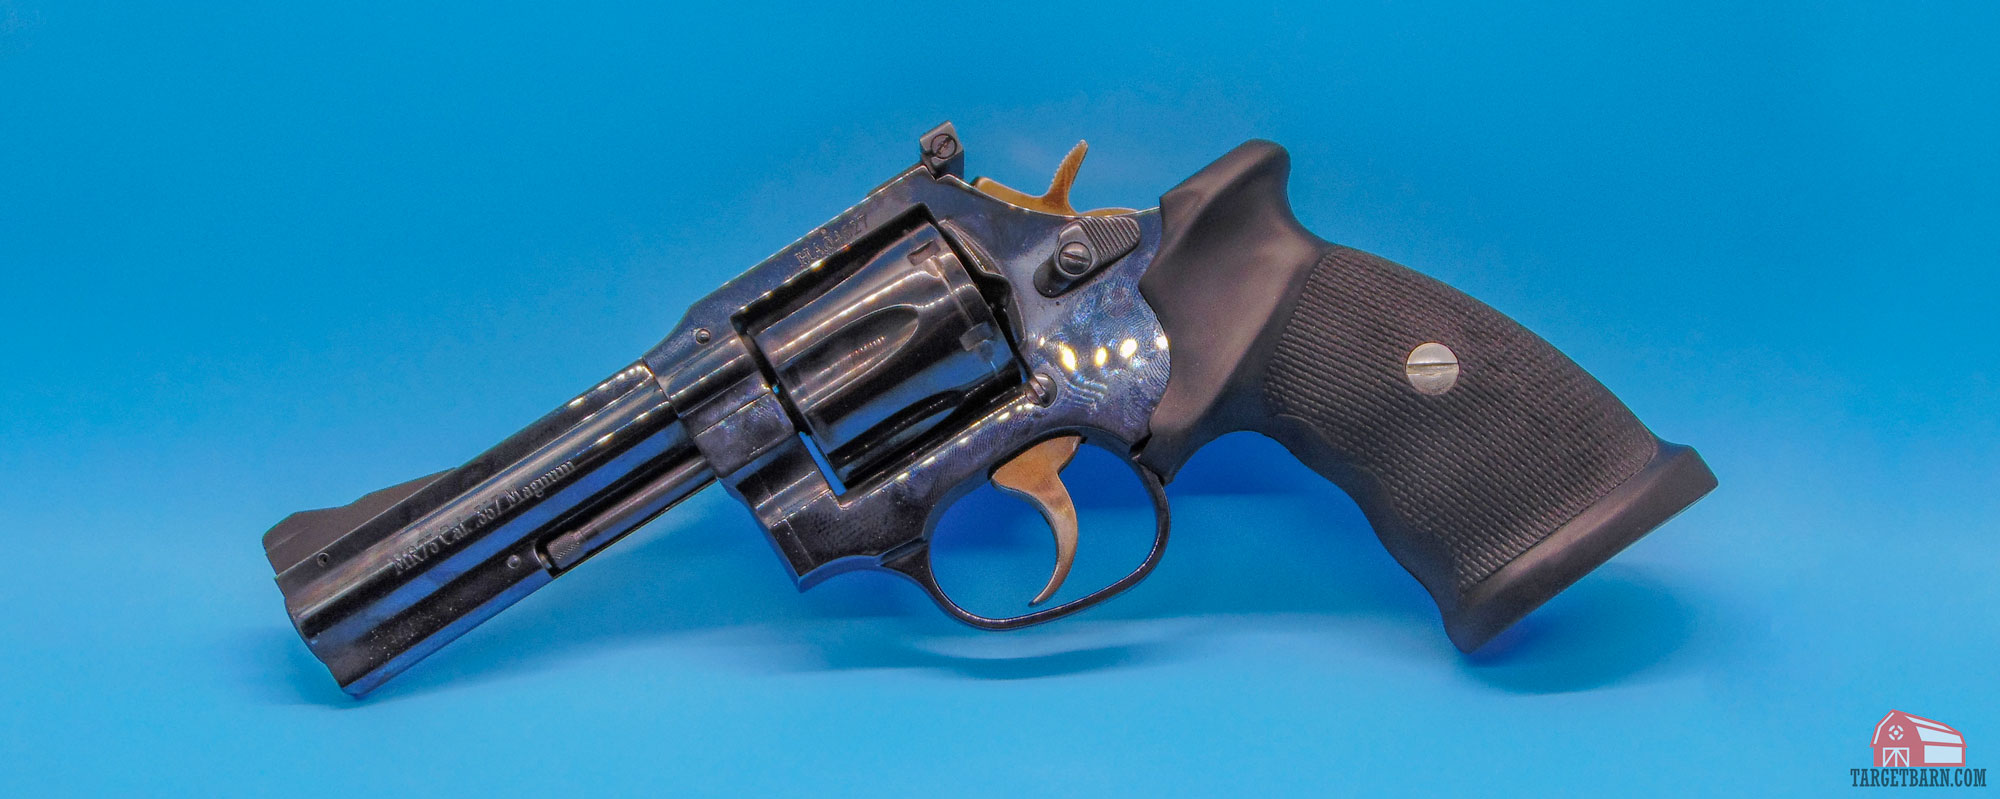 the manurhin mr73 revolver